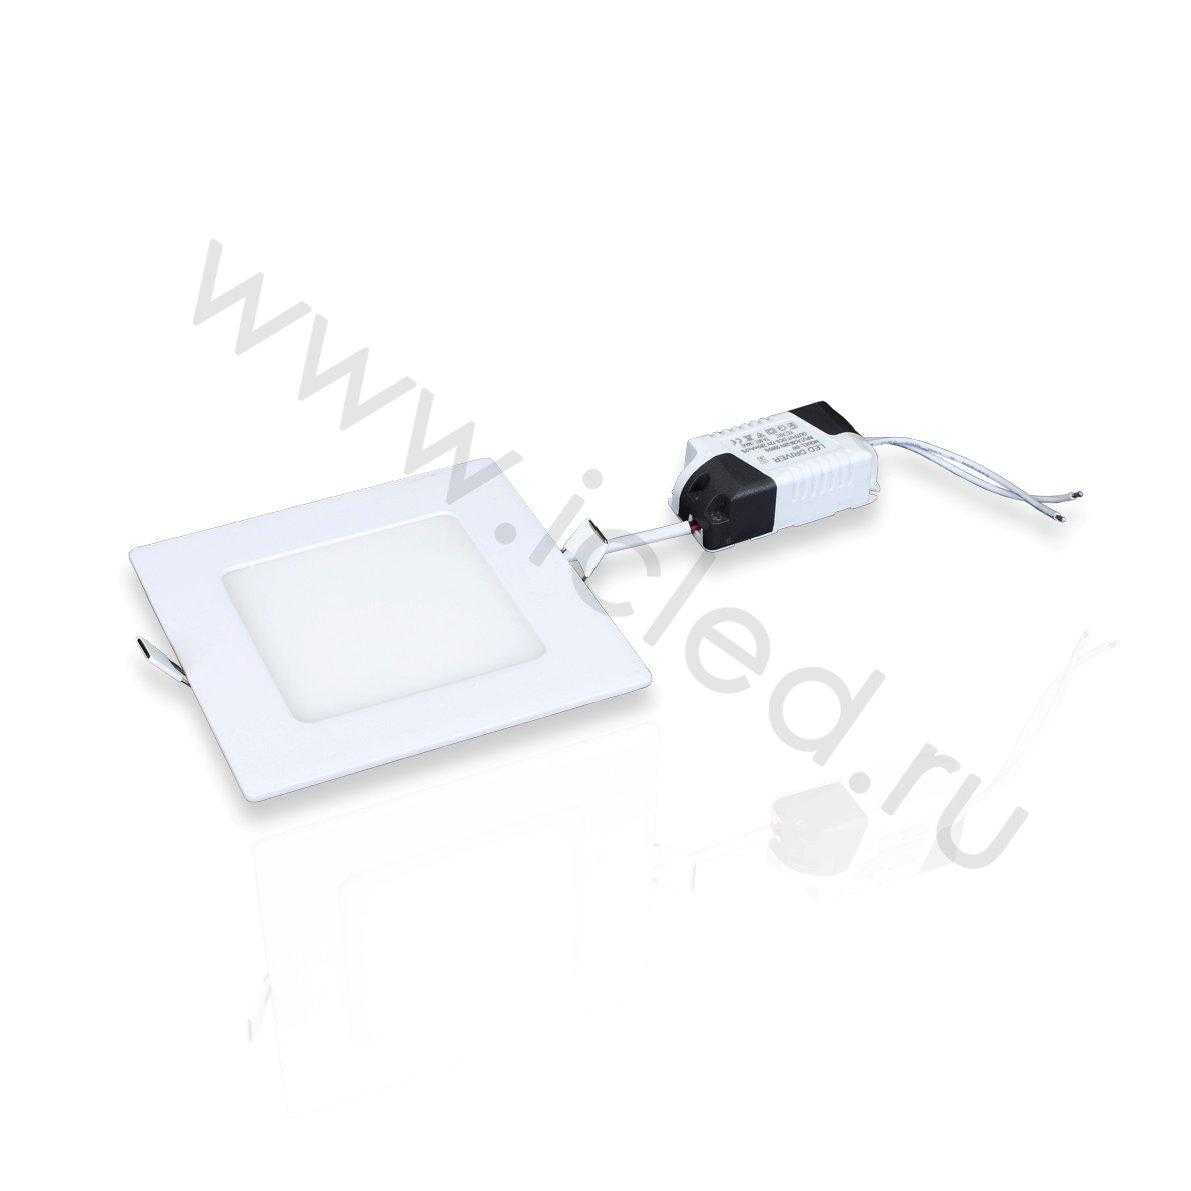 Светодиодные светильники Светодиодный светильник встраиваемый IC-SW120 B809 (220V, 6W, warm white)